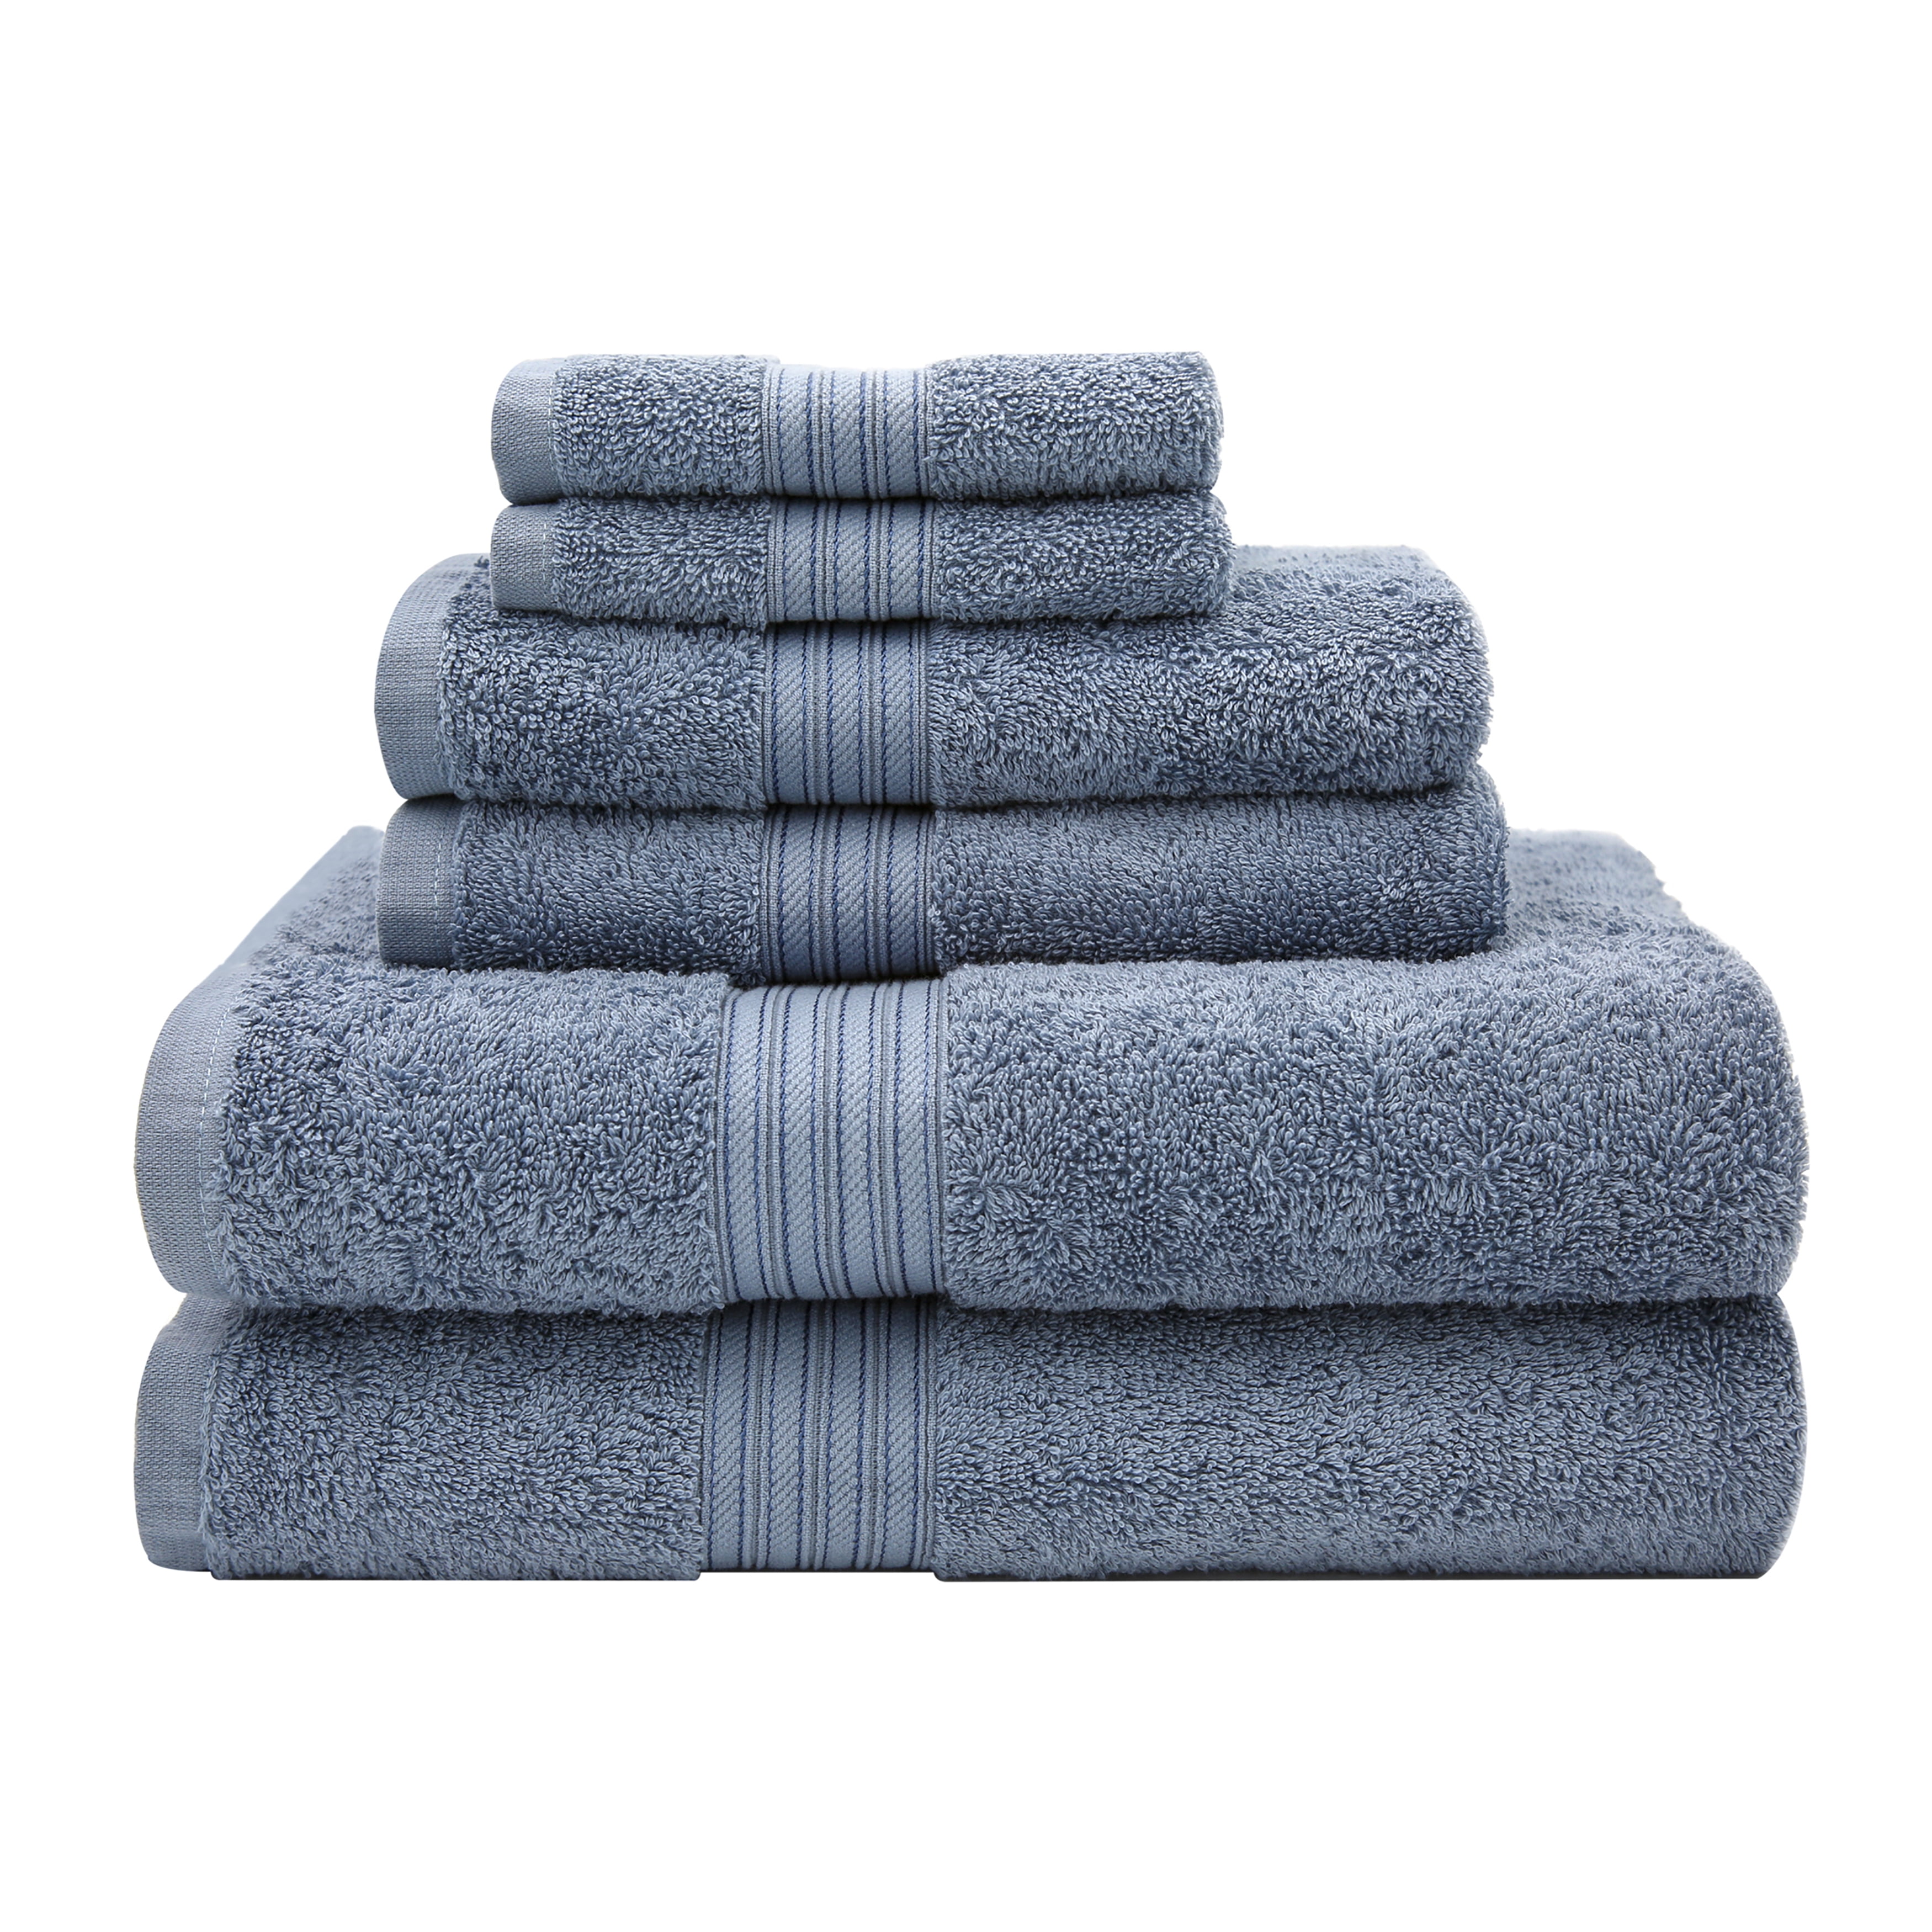 Source Pillow Towels 6 Piece Set Navy Blue Bathroom Large White Egyptian  Brooklinen Plush Sauna Onsen Luxury Orgnic Cotton Bath Towel on  m.